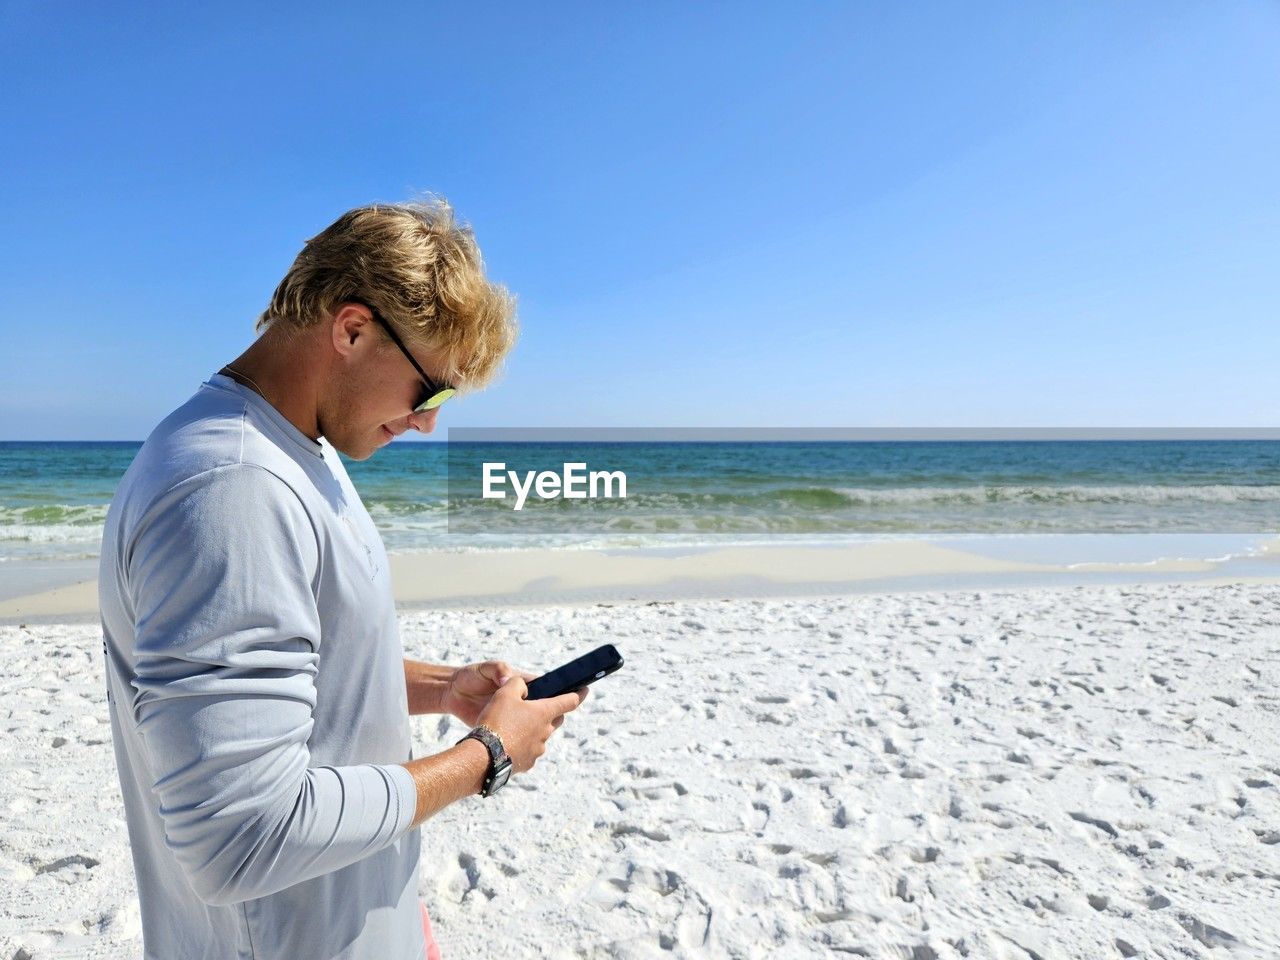 Cute millennial dude texting on beach in summertime.